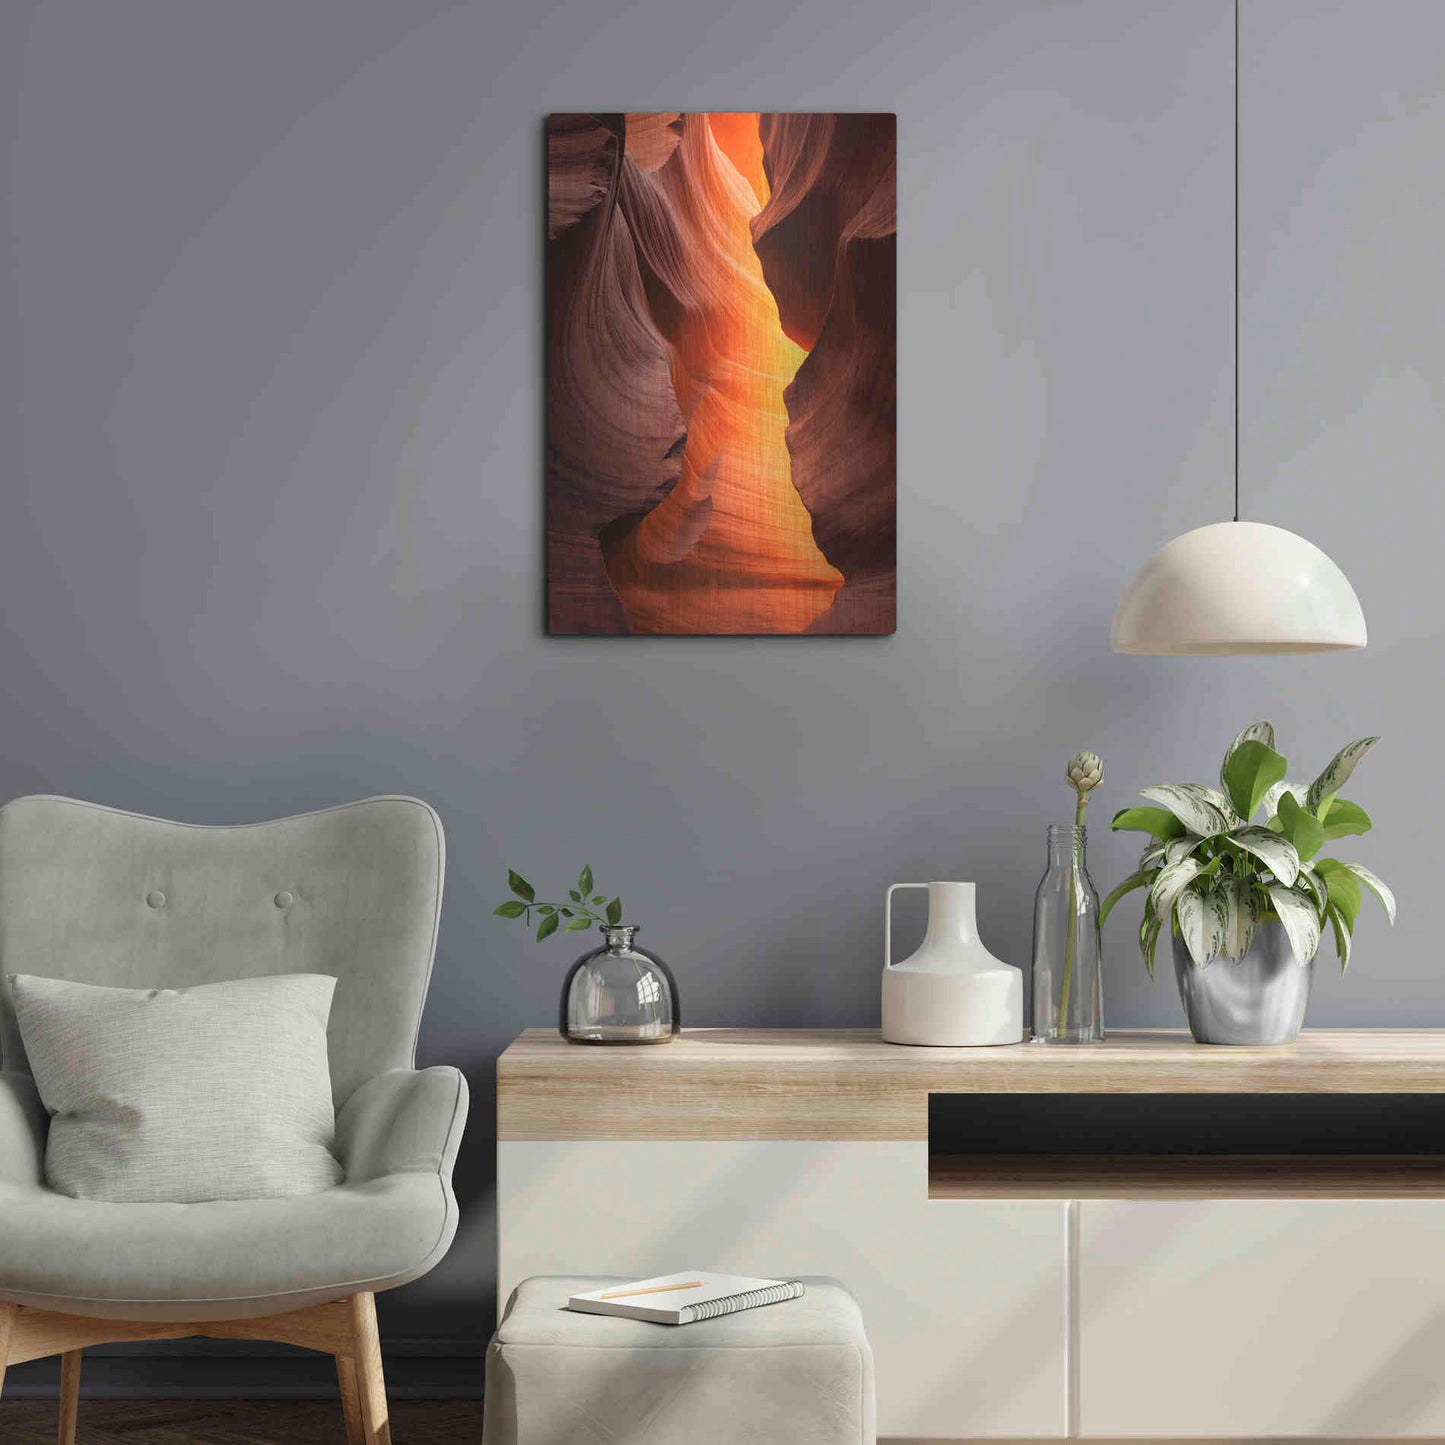 Luxe Metal Art 'The Burning' by Darren White, Metal Wall Art,16x24